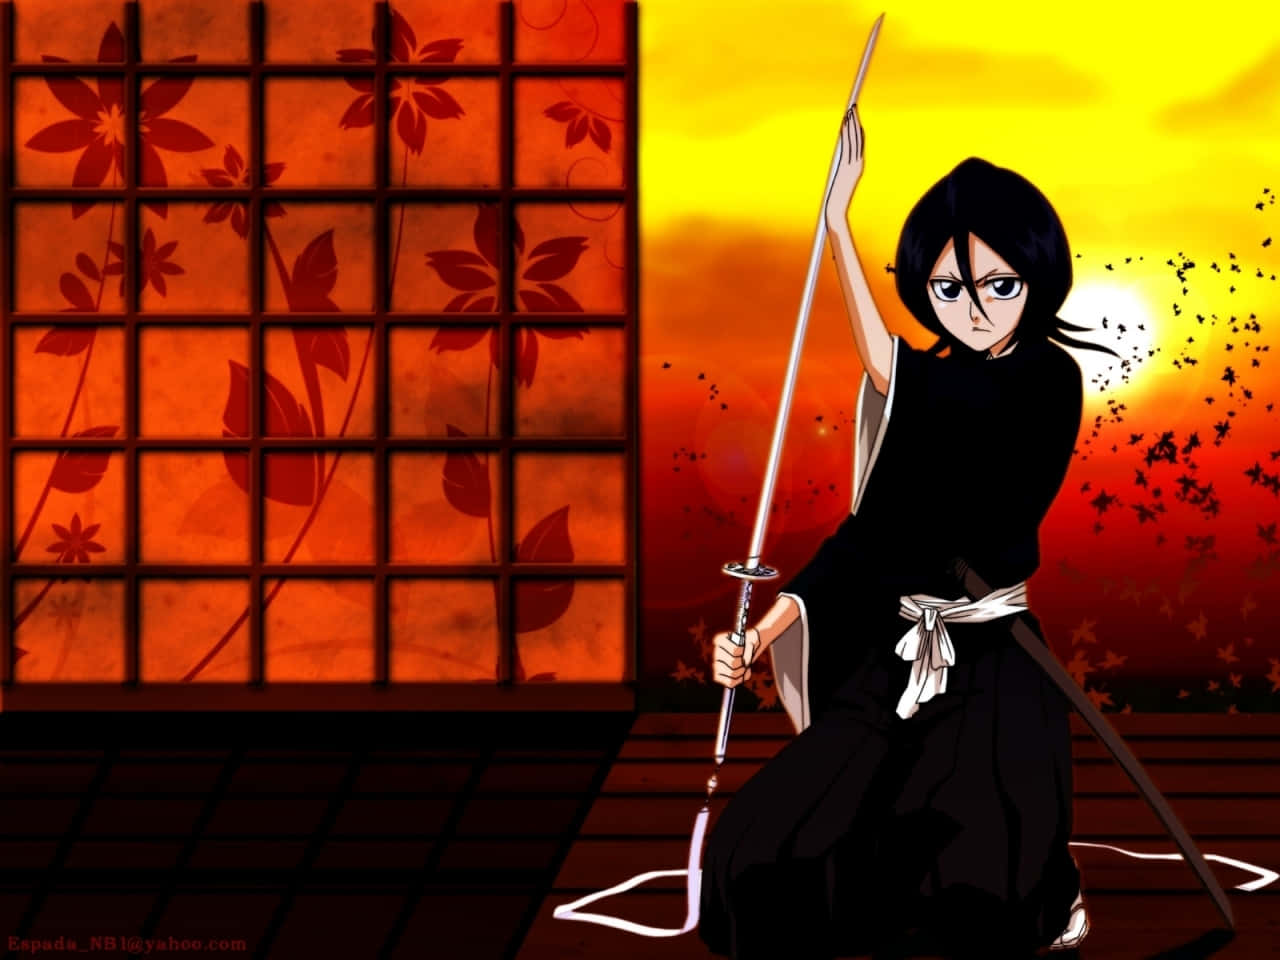 "Rukia Kuchiki, the heroic Soul Reaper, ready to take on any challenge!" Wallpaper